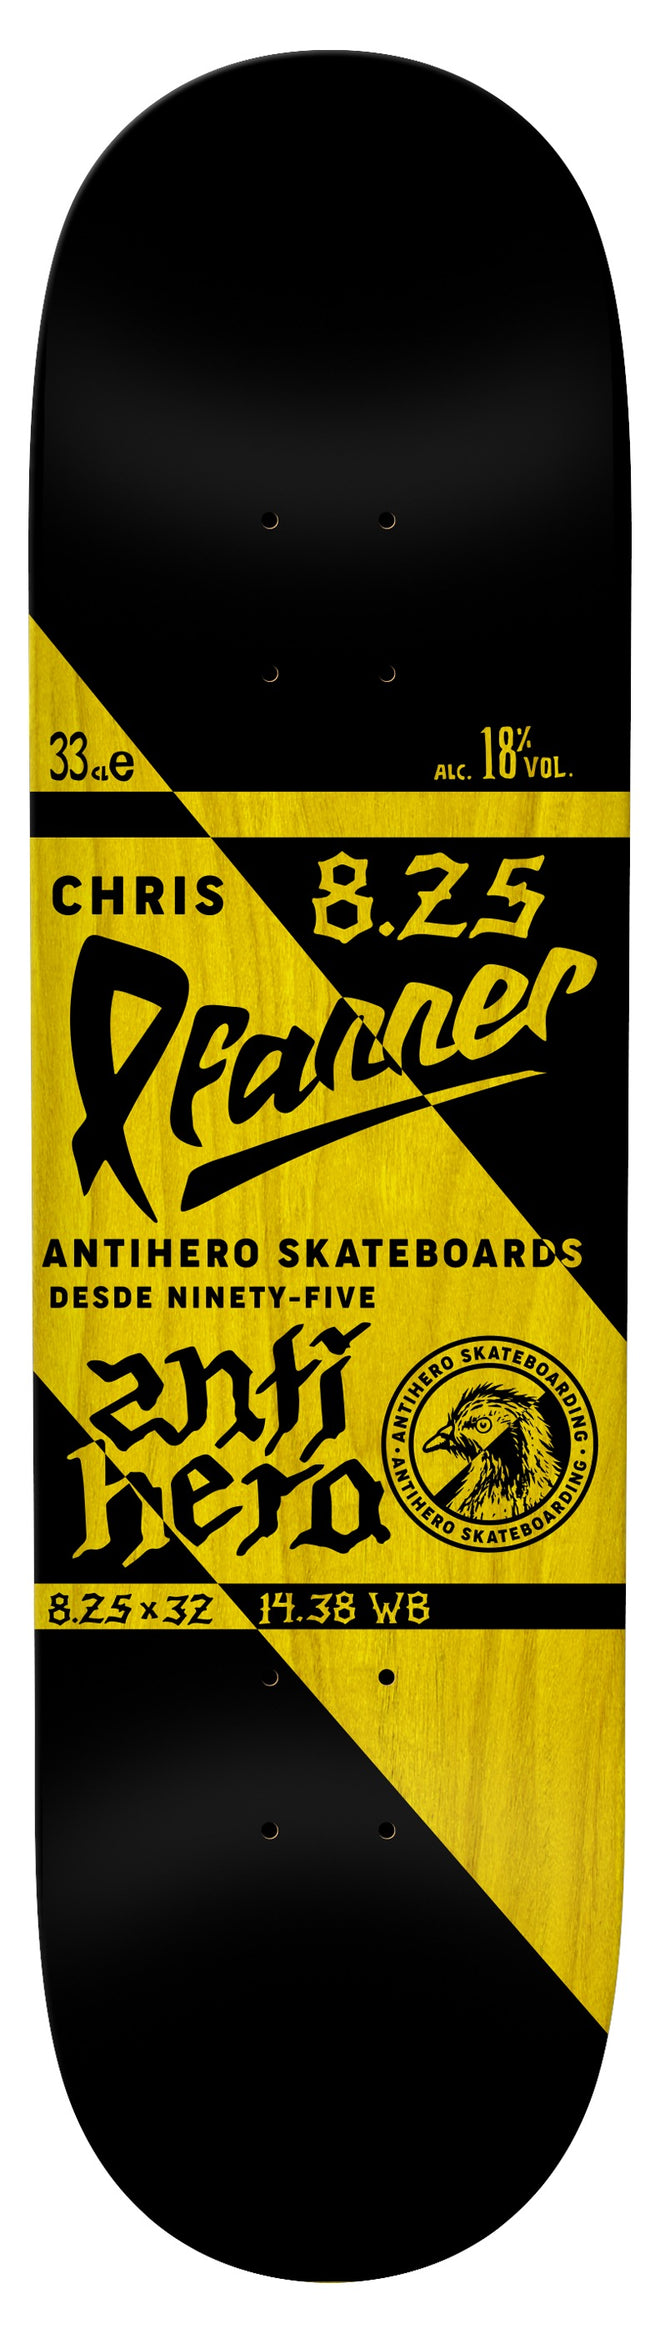 Antihero Pfanner Refrescos Skate Deck - M I L O S P O R T